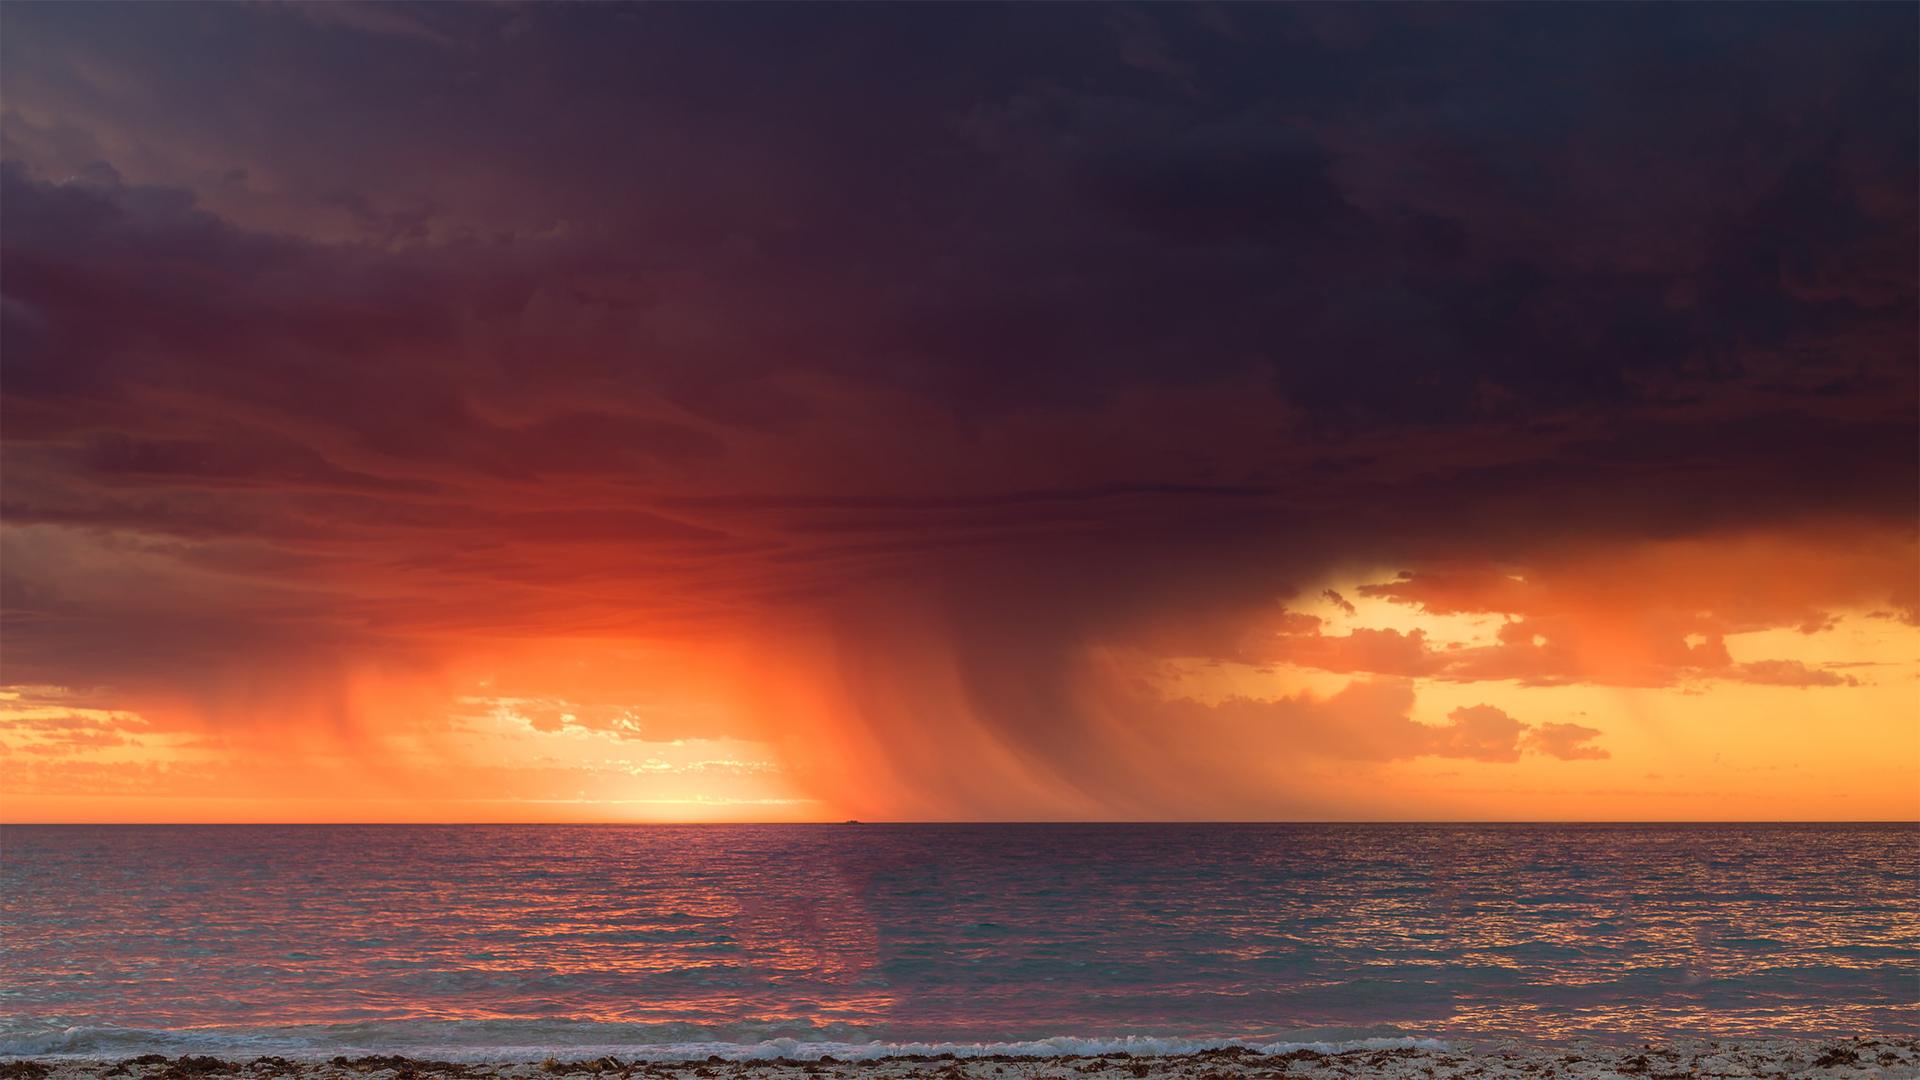 Sunset storm in Western Australia